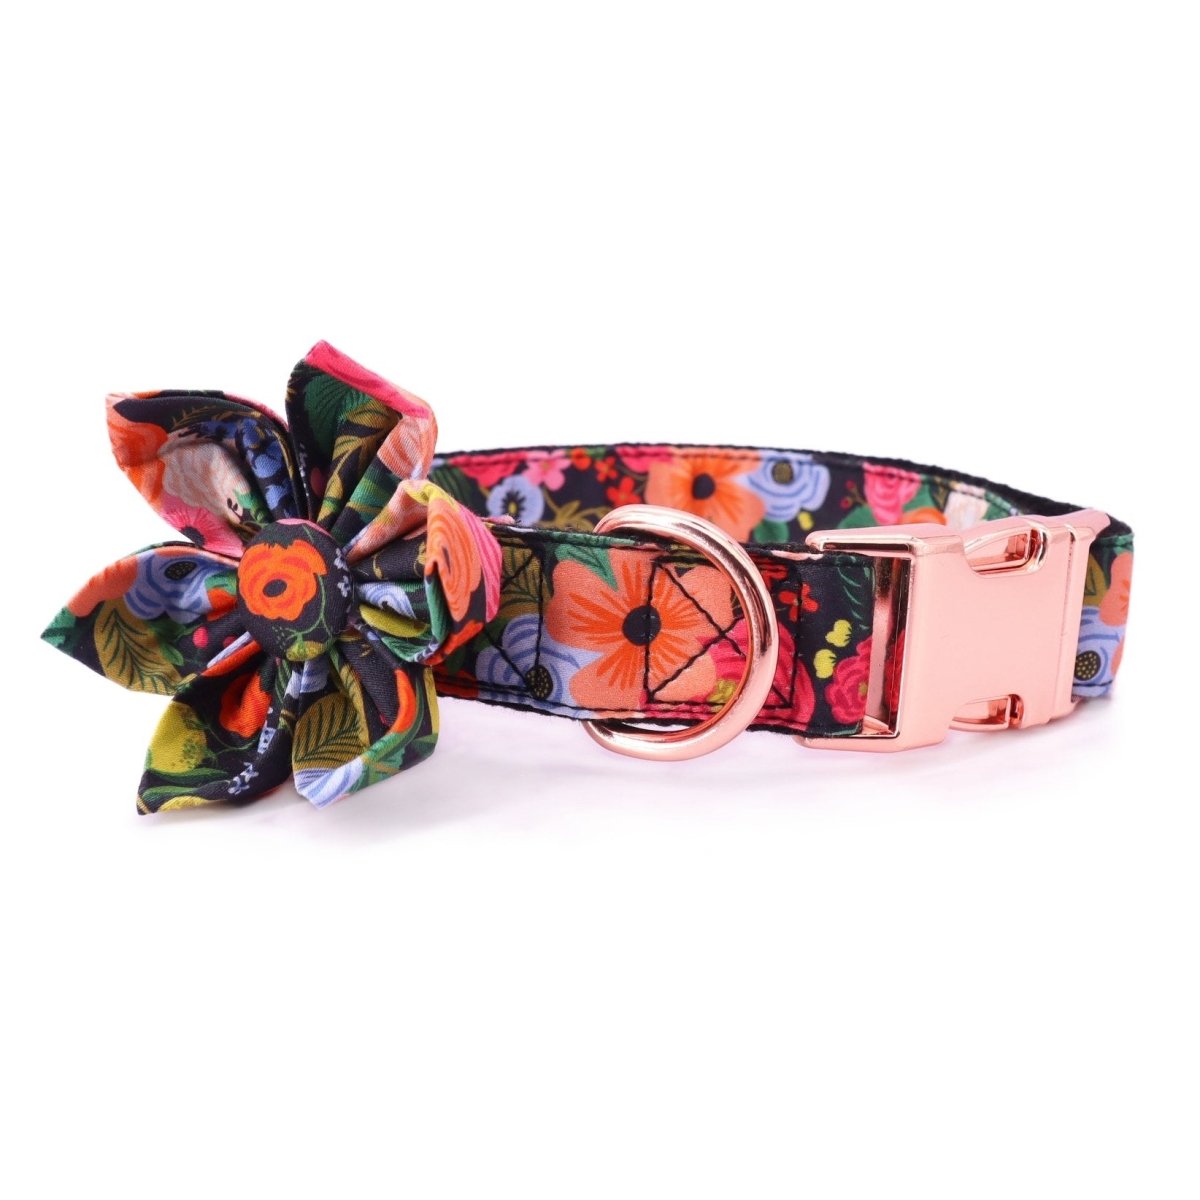 dog flower collar with name - small dog collar girl - dog collar with flowers for wedding